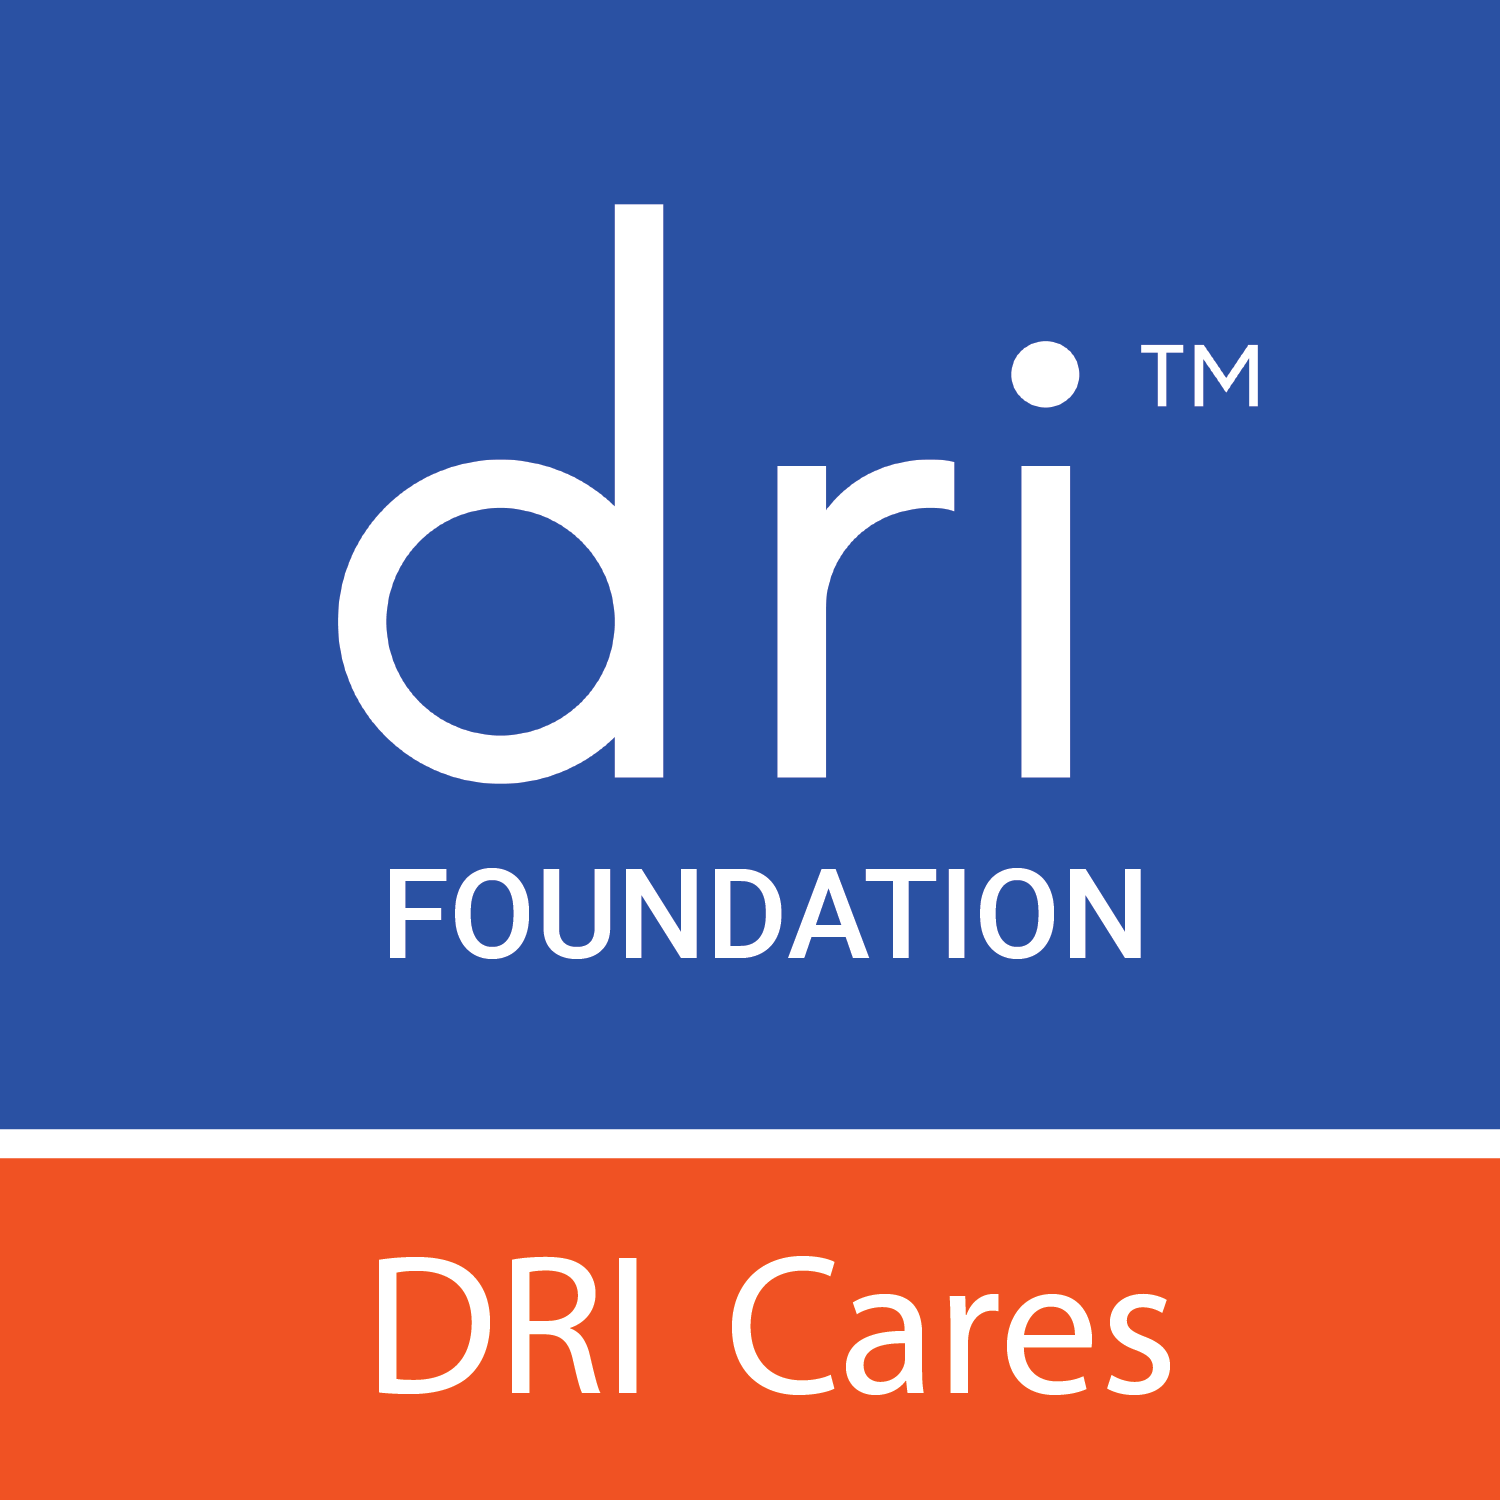 DRI Foundation, DRI Cares logo